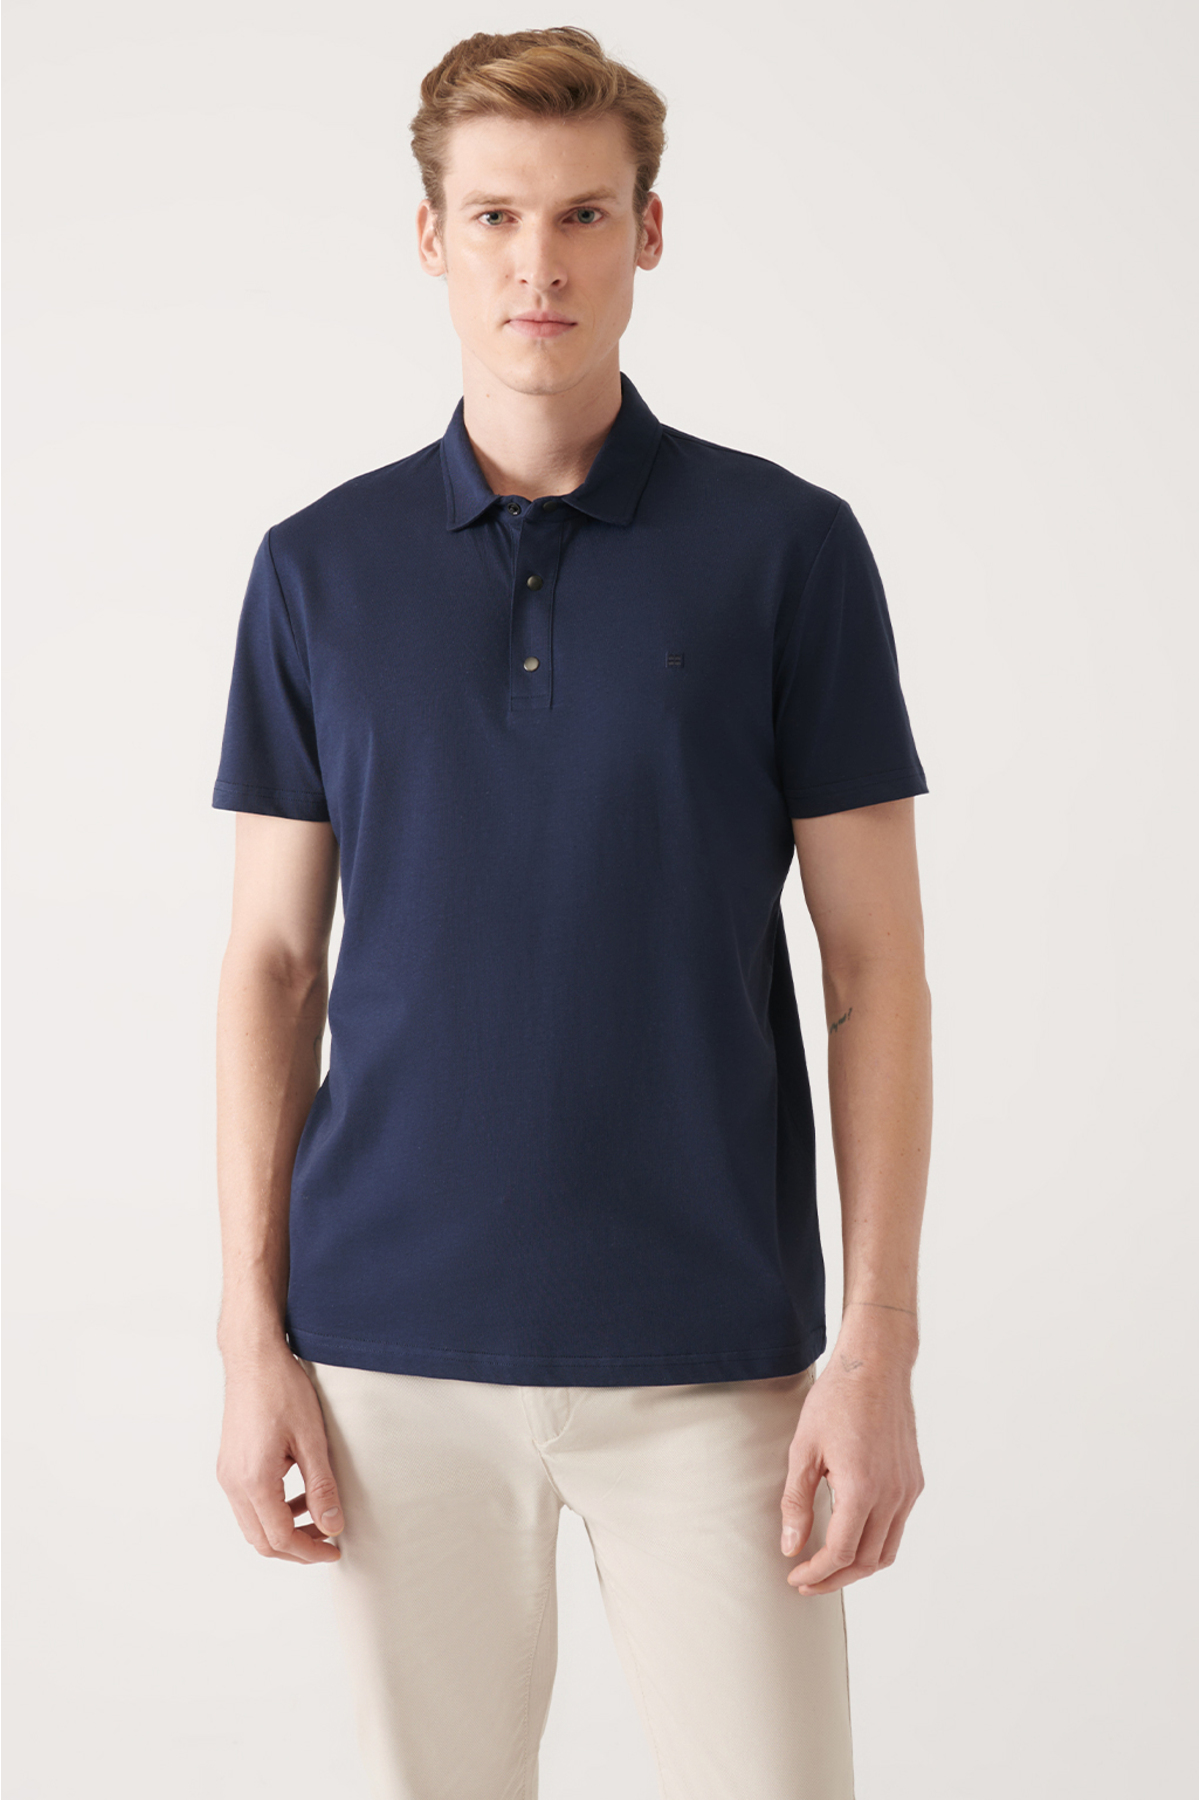 Avva Men's Navy Blue 100% Cotton Knitted Standard Fit Normal Cut 3 Snaps Polo Neck T-shirt